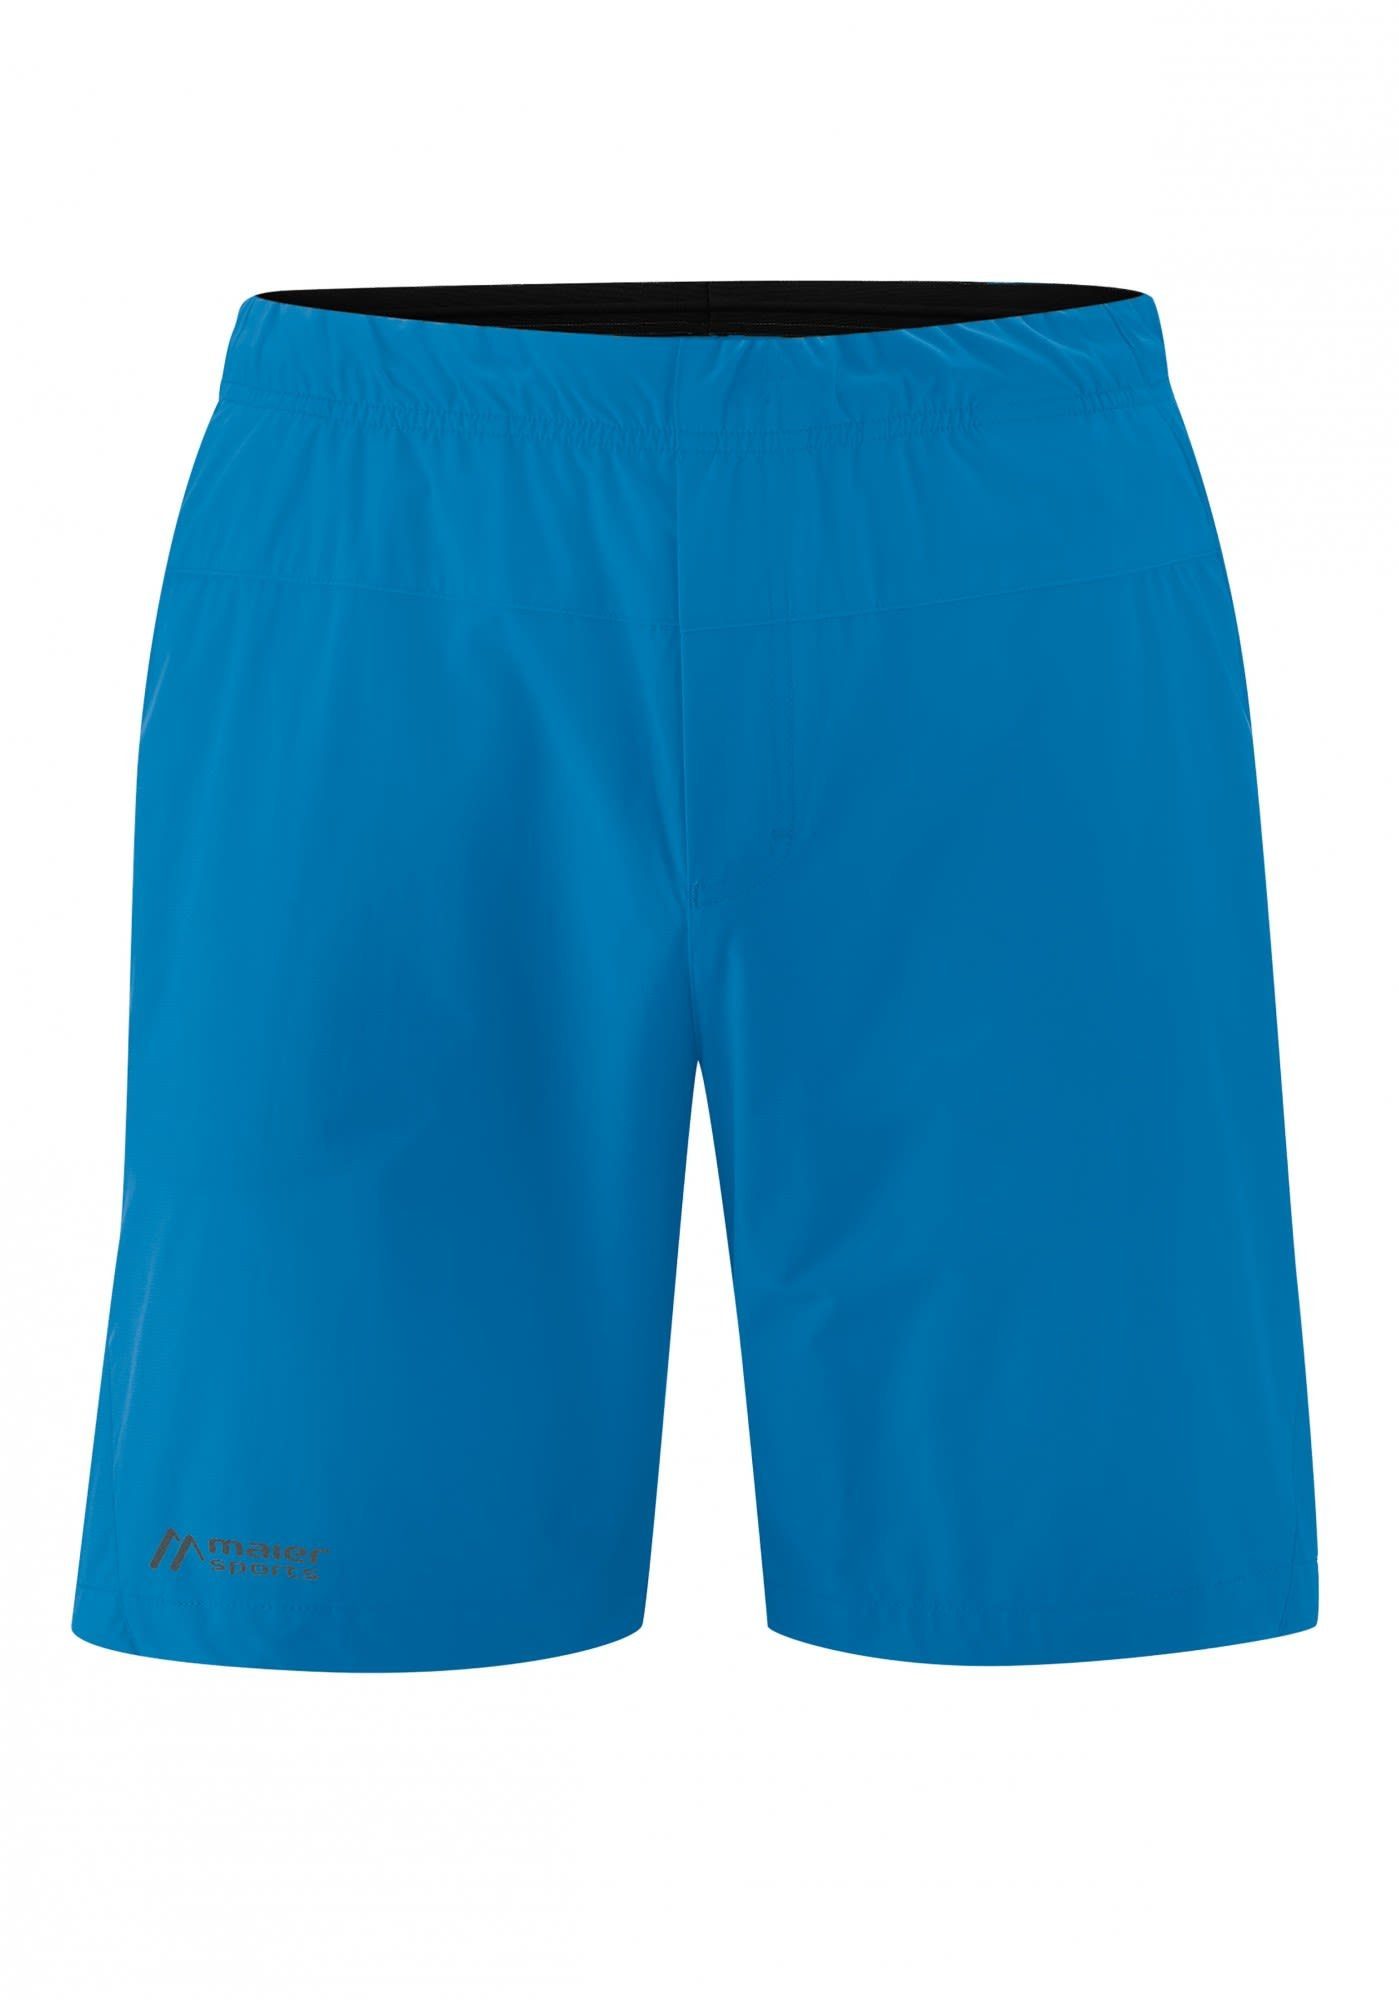 Maier Sports Strandshorts Maier Shorts Sports Blue M Fortunit Imperial Herren Short